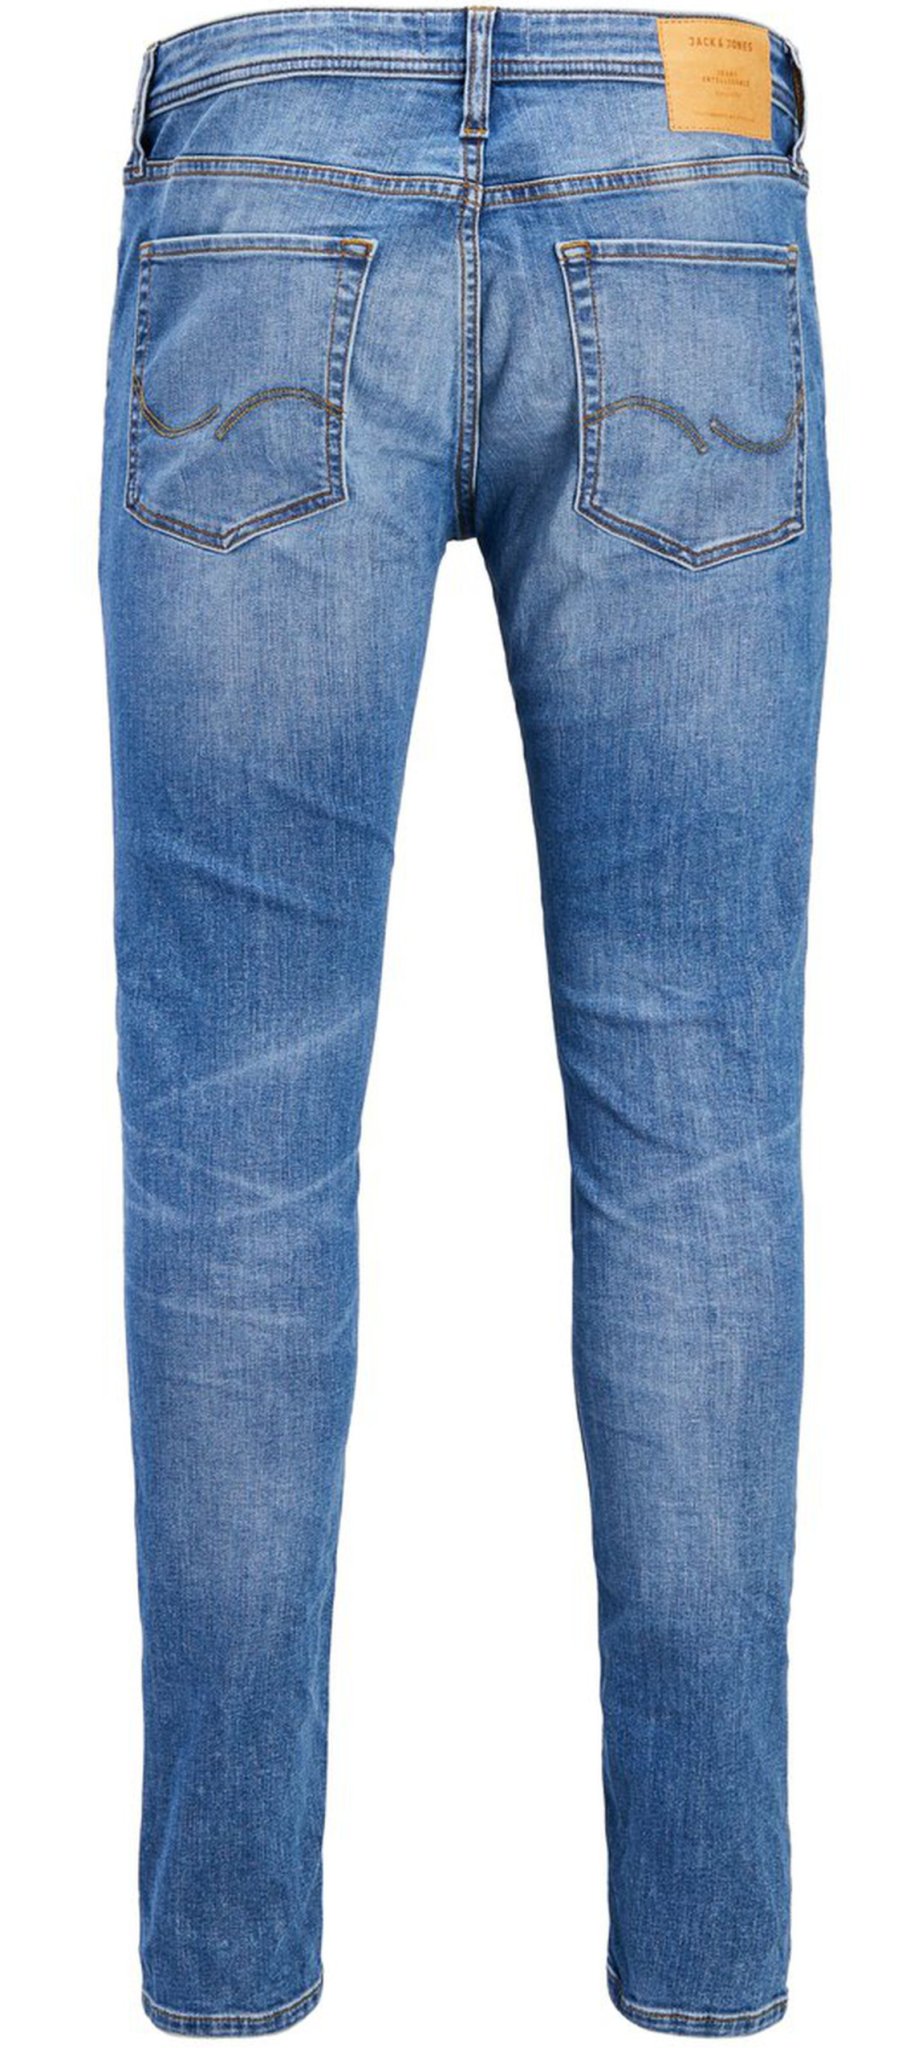 Jack & Jones Boys Skinny Fit Jeans - Liam - Light Blue - GLS Clothing